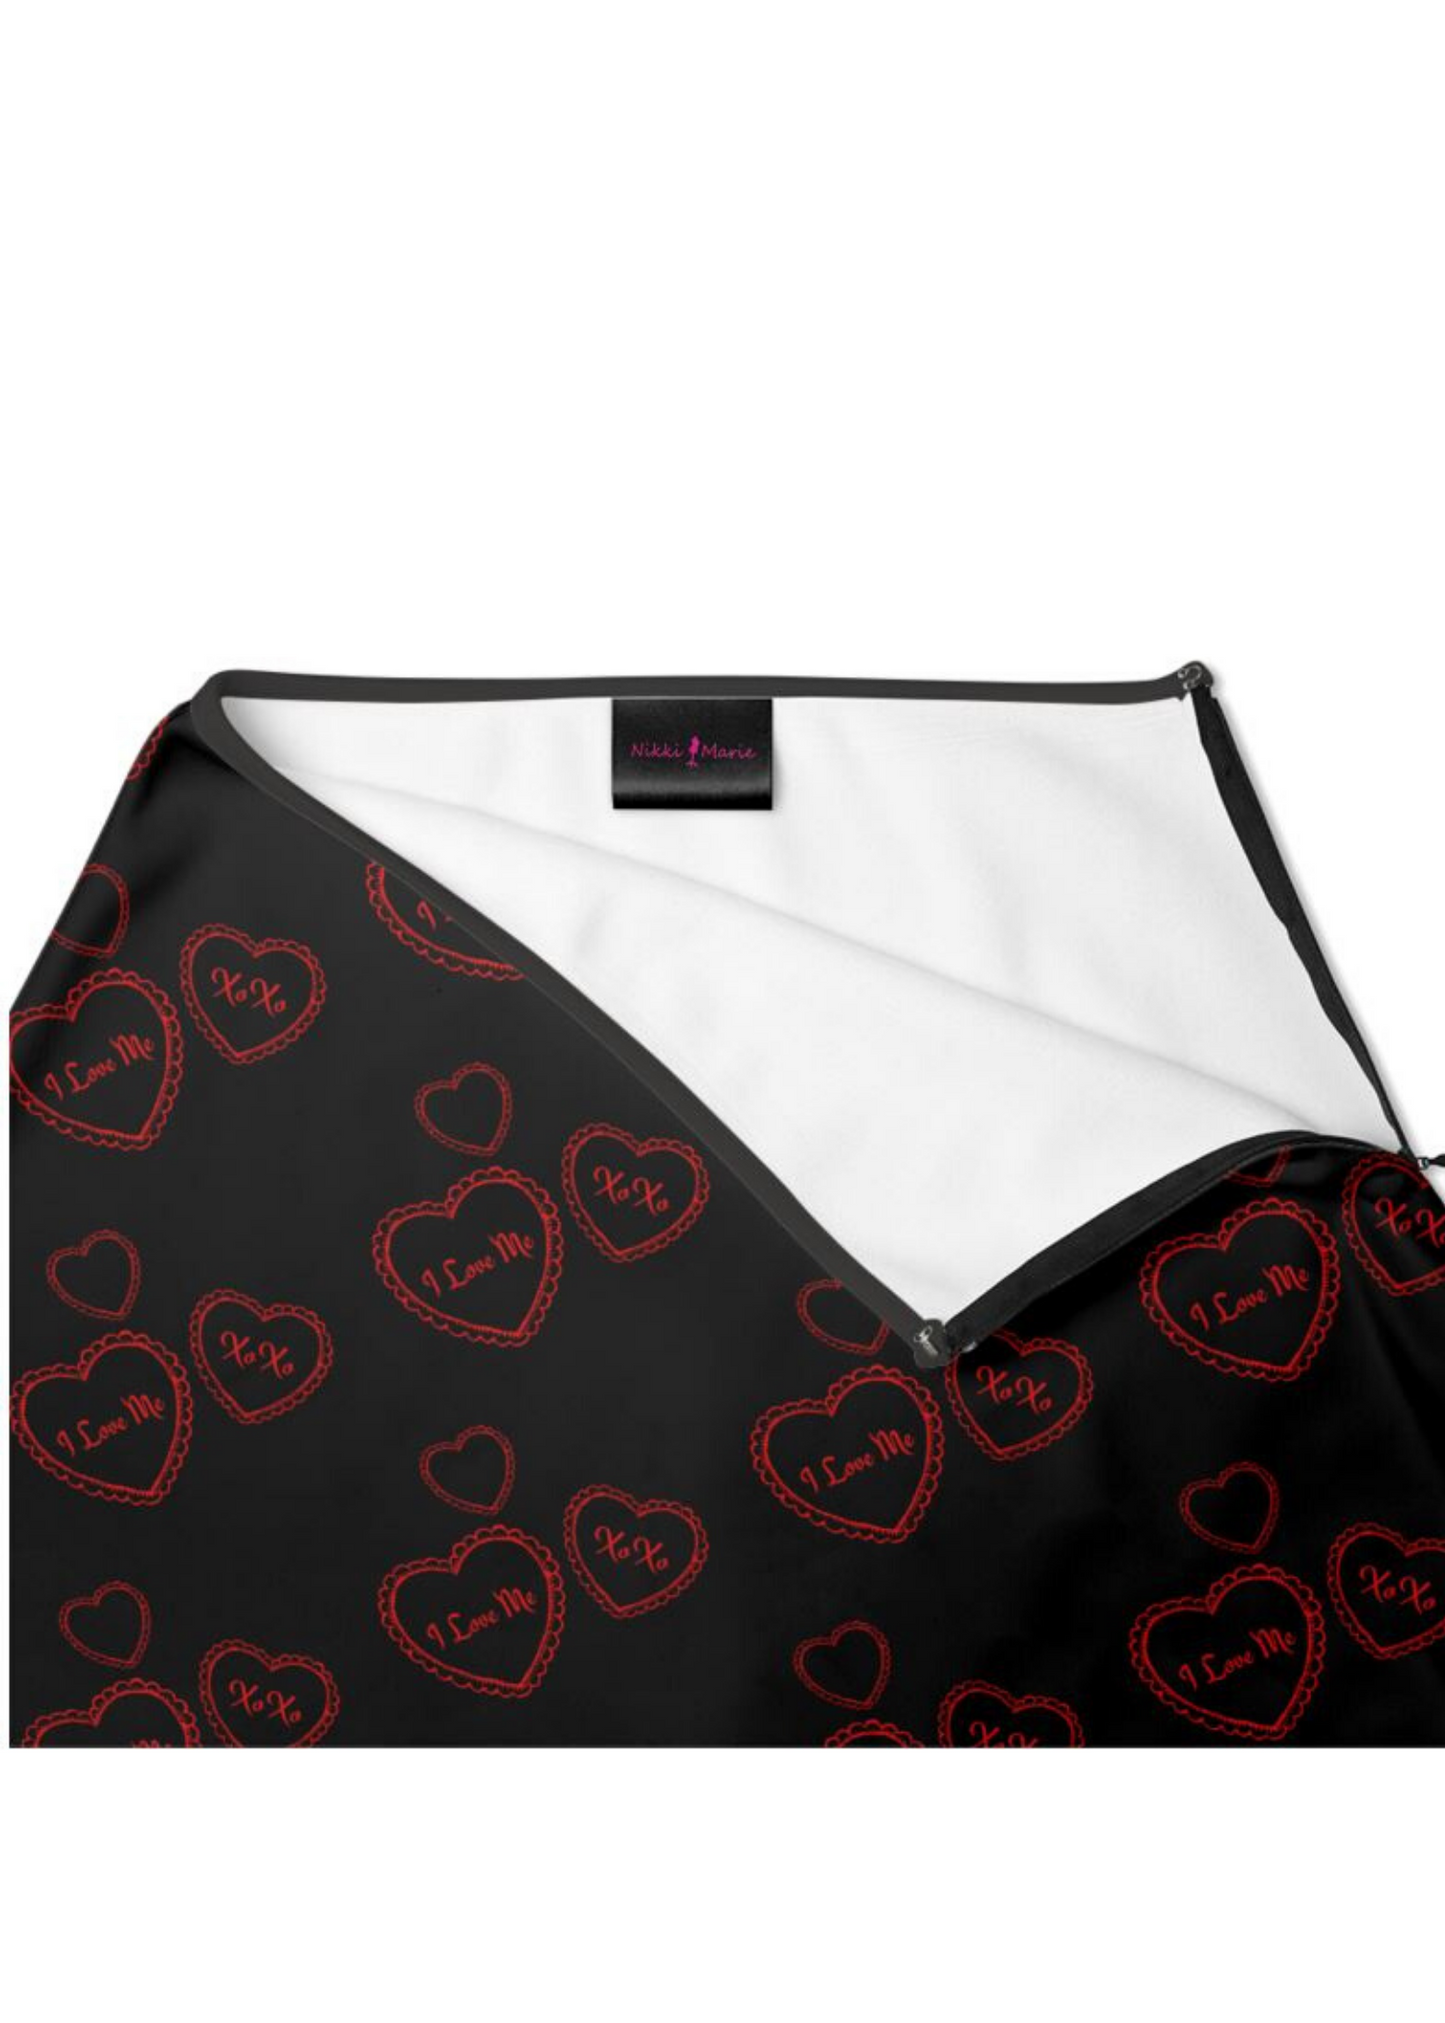 I Love Me Hearts Print - Scuba Knit Knee Length Skirt - Black